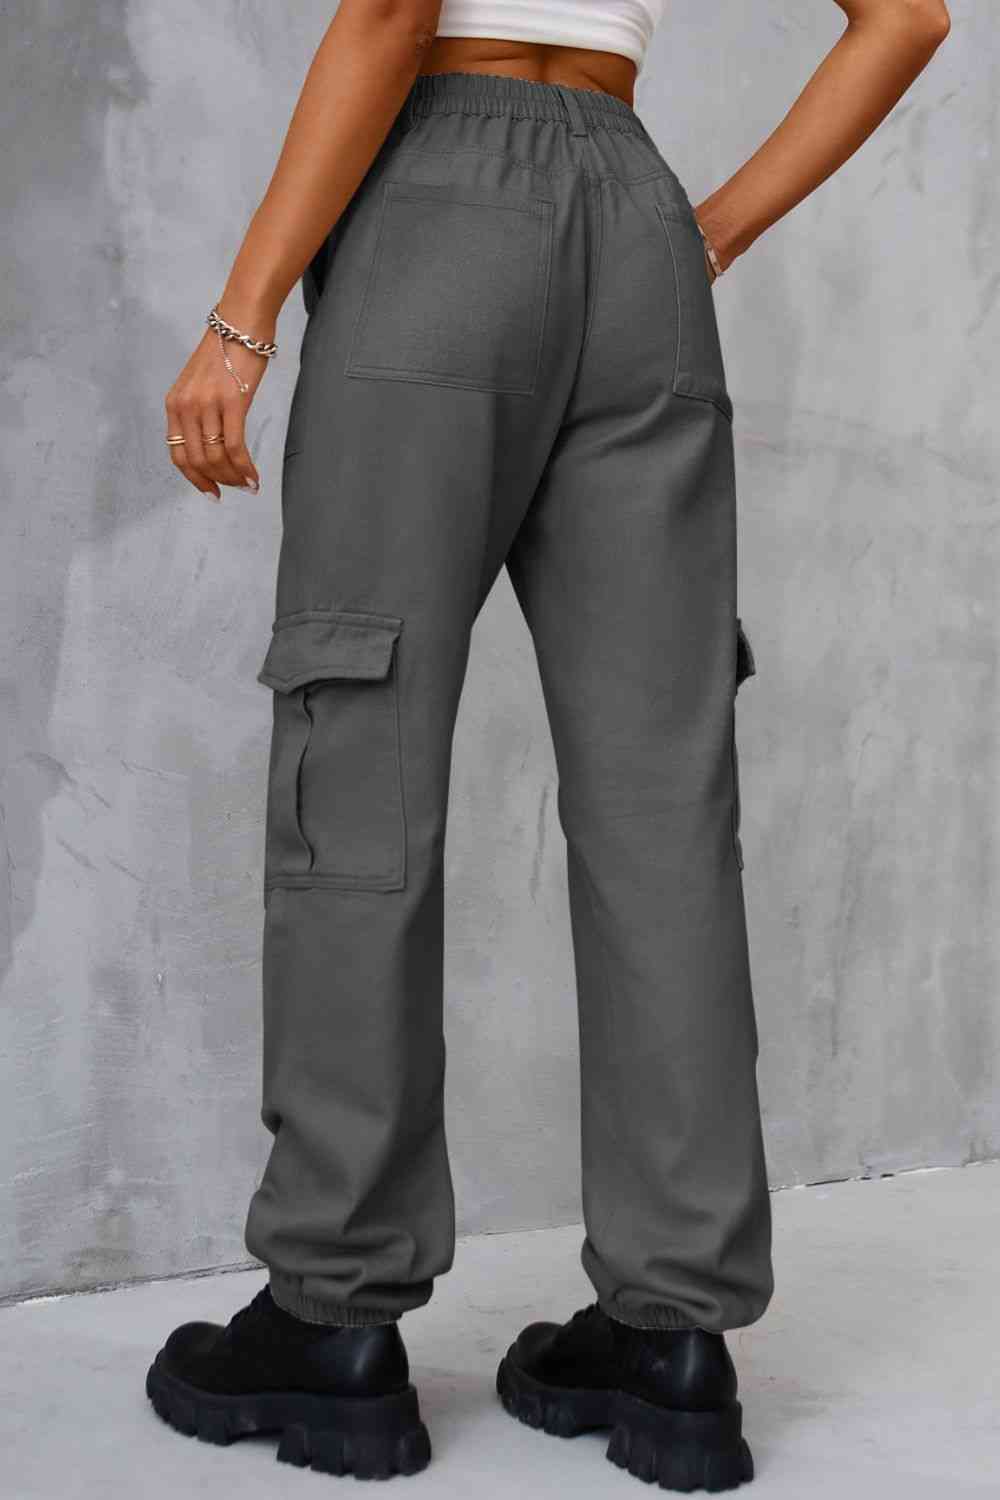 Light Slate Gray Buttoned High Waist Jeans with Pockets Denim